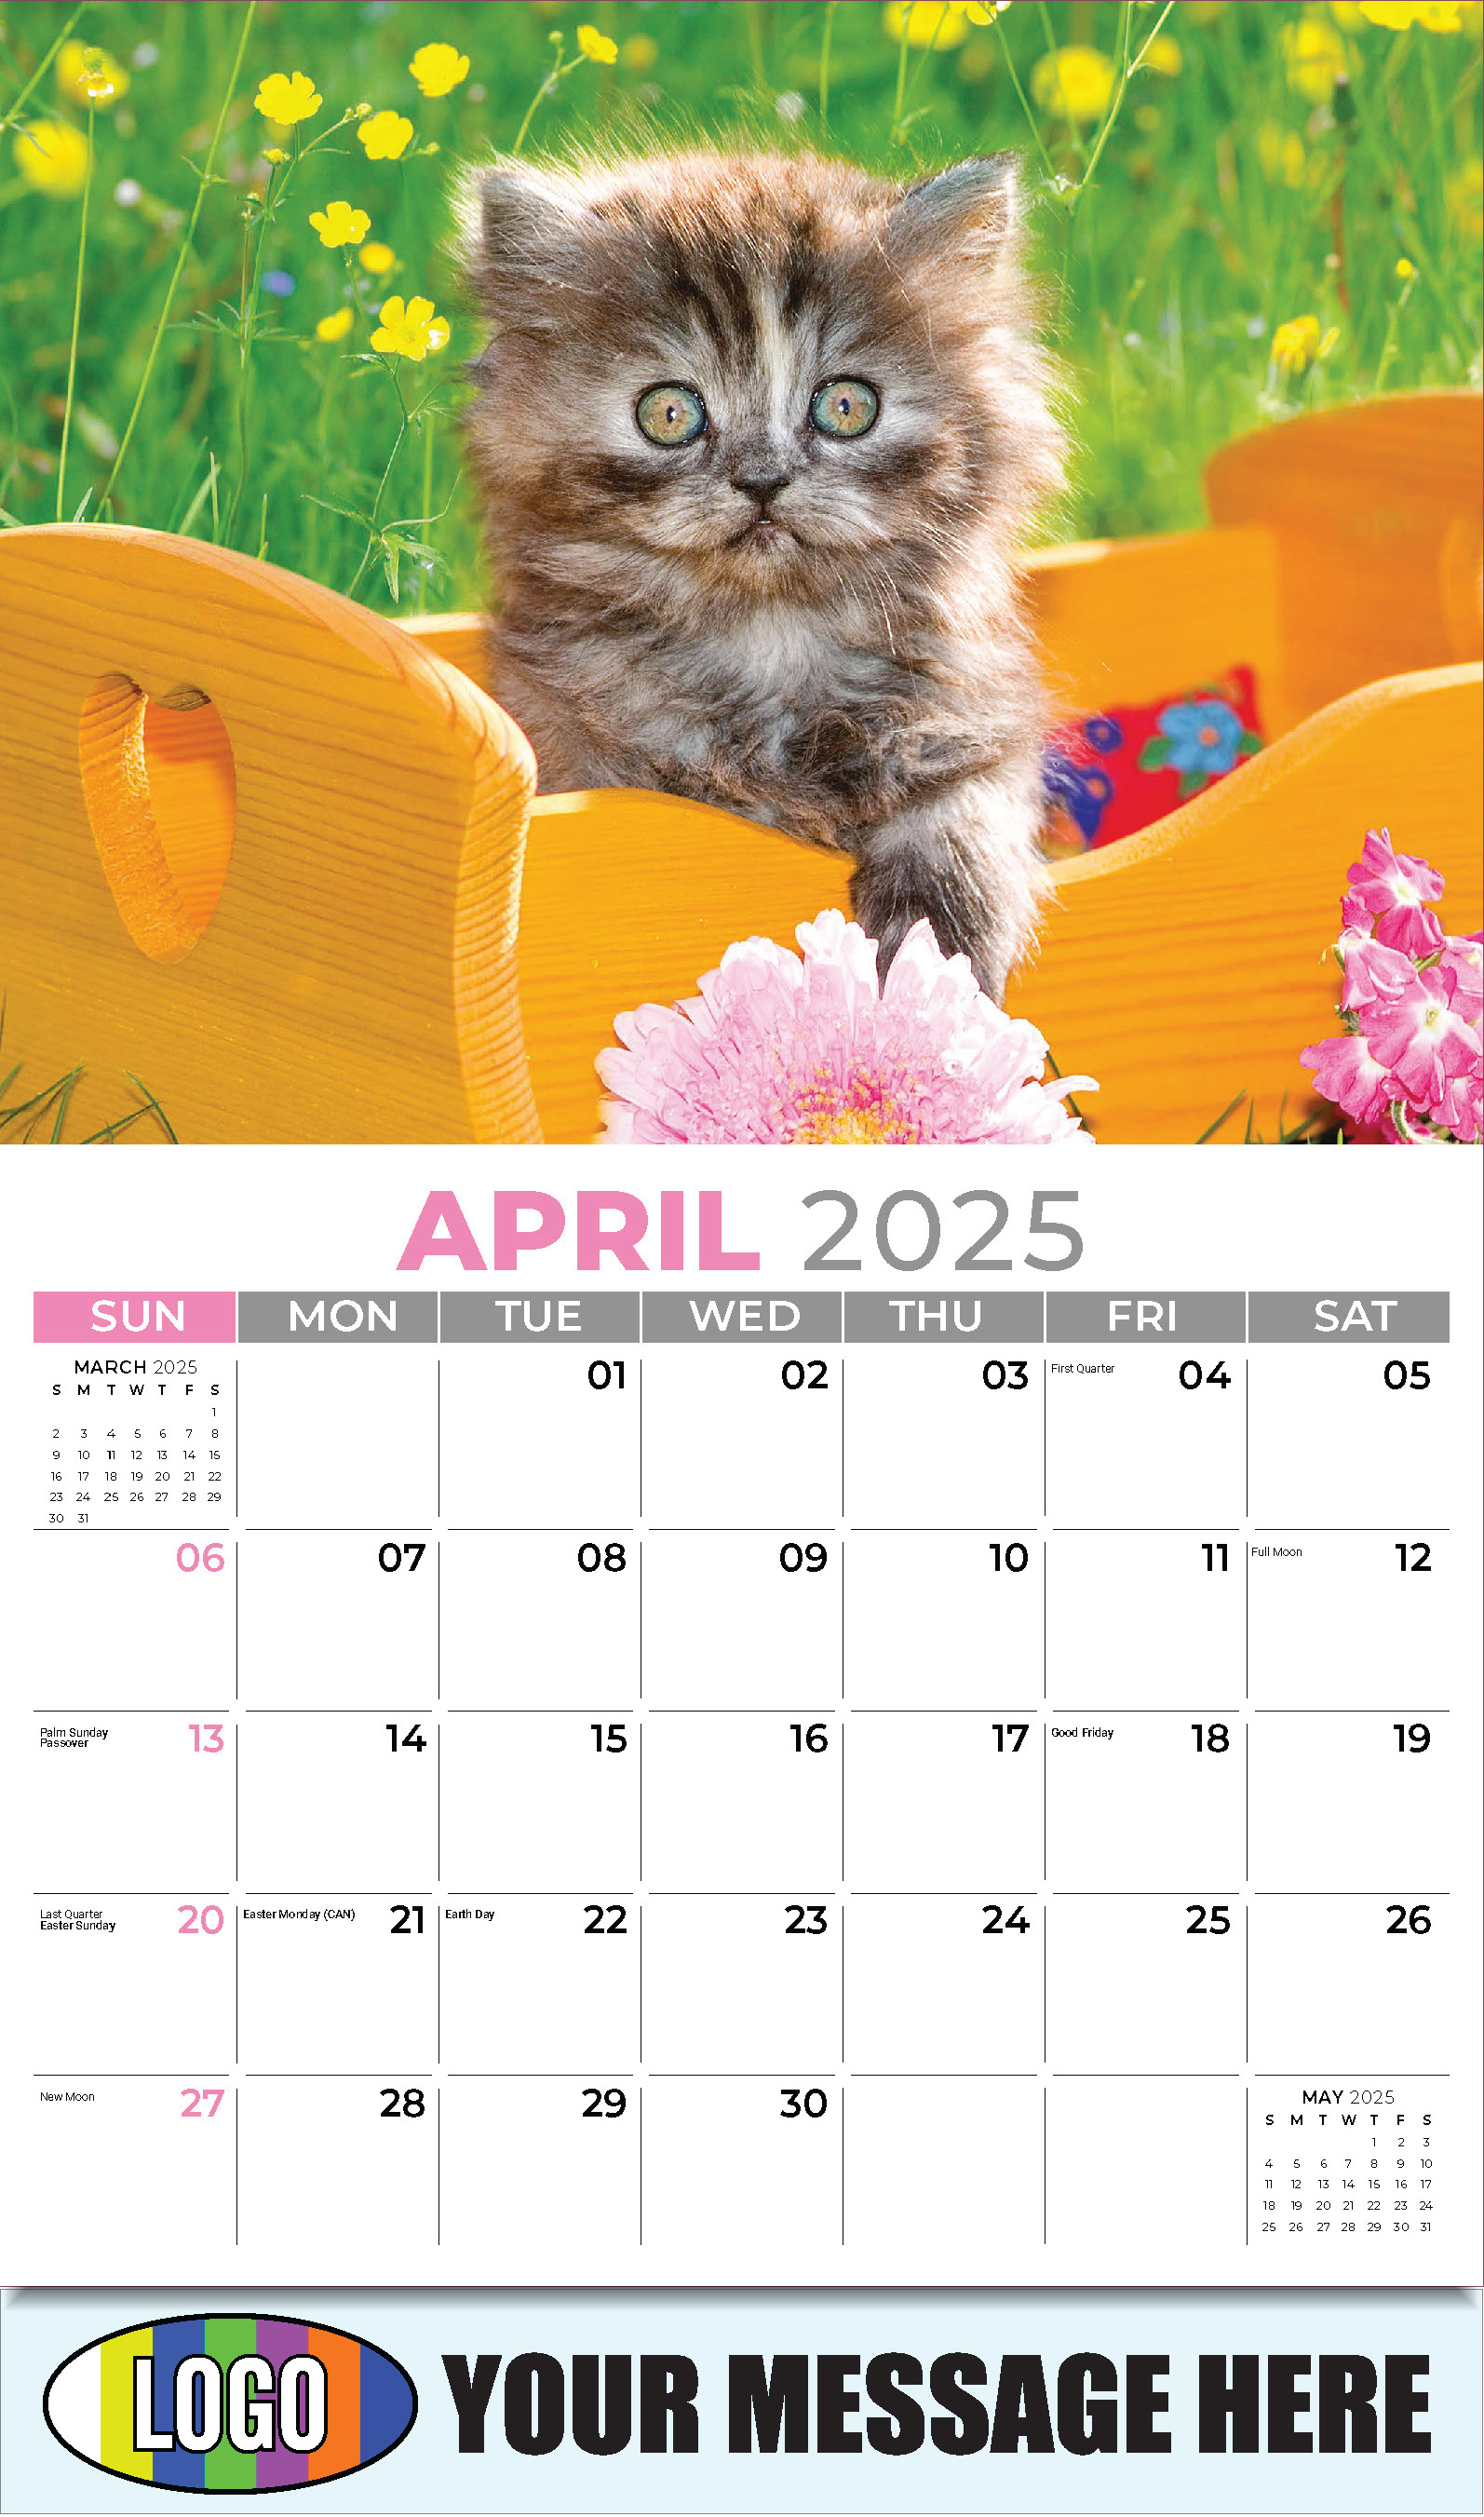 Kittens 2025 Business Promo Wall Calendar - April